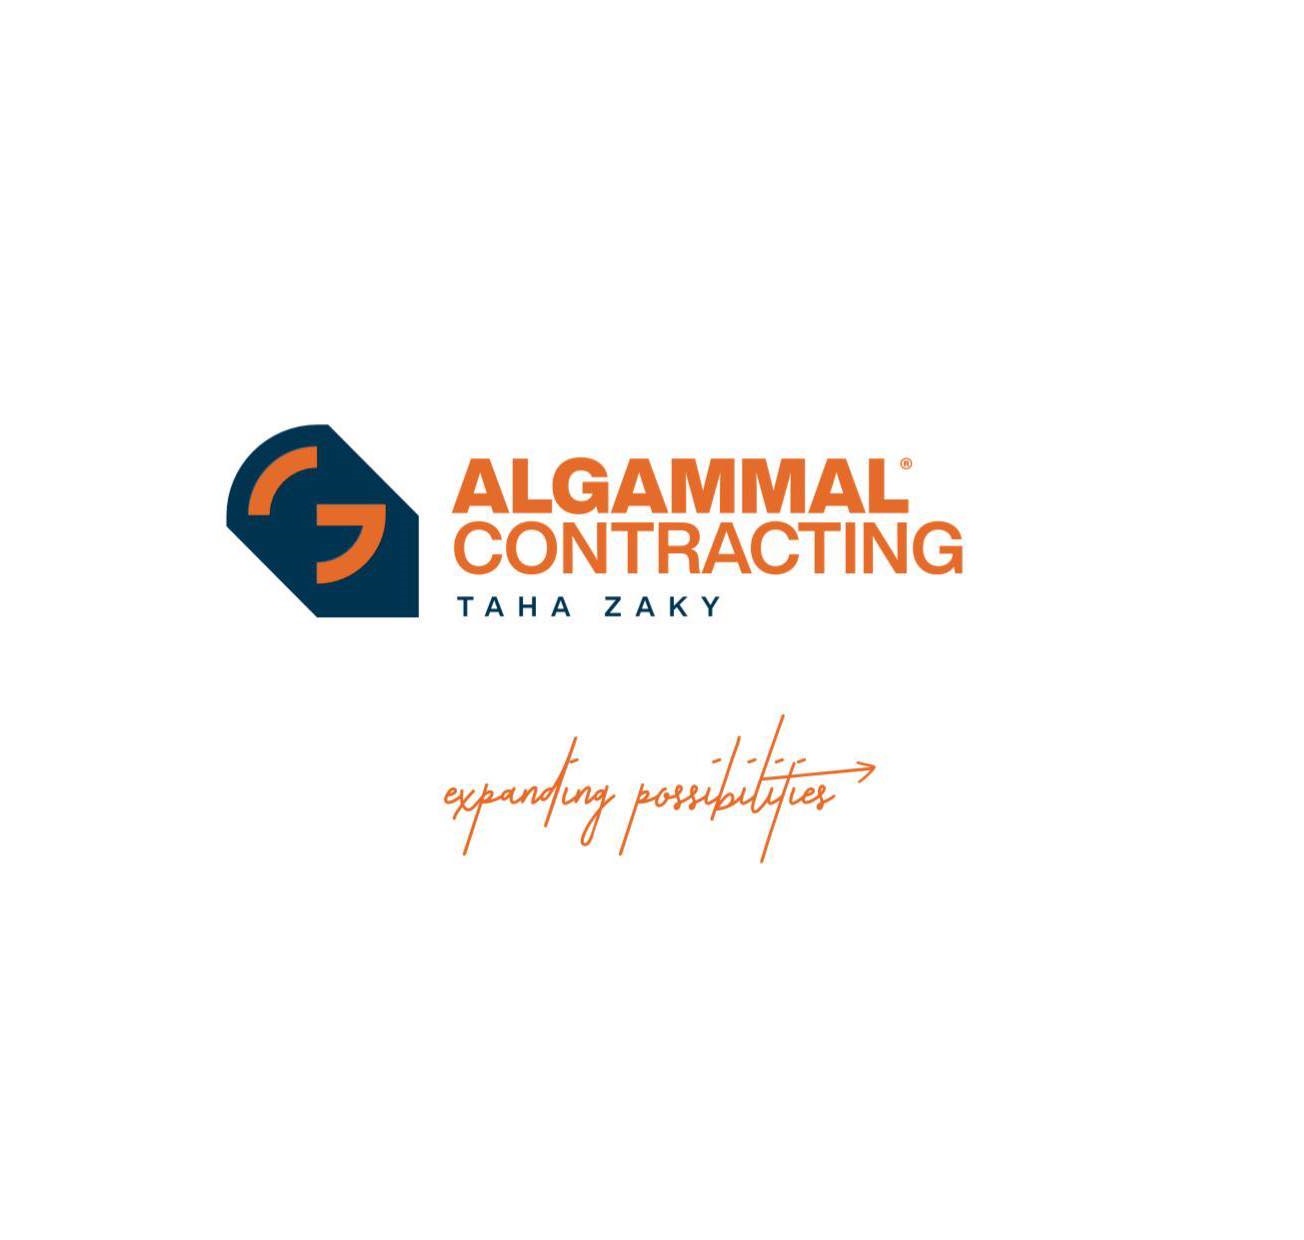 Al-Gammal Group a set of Construction Companies